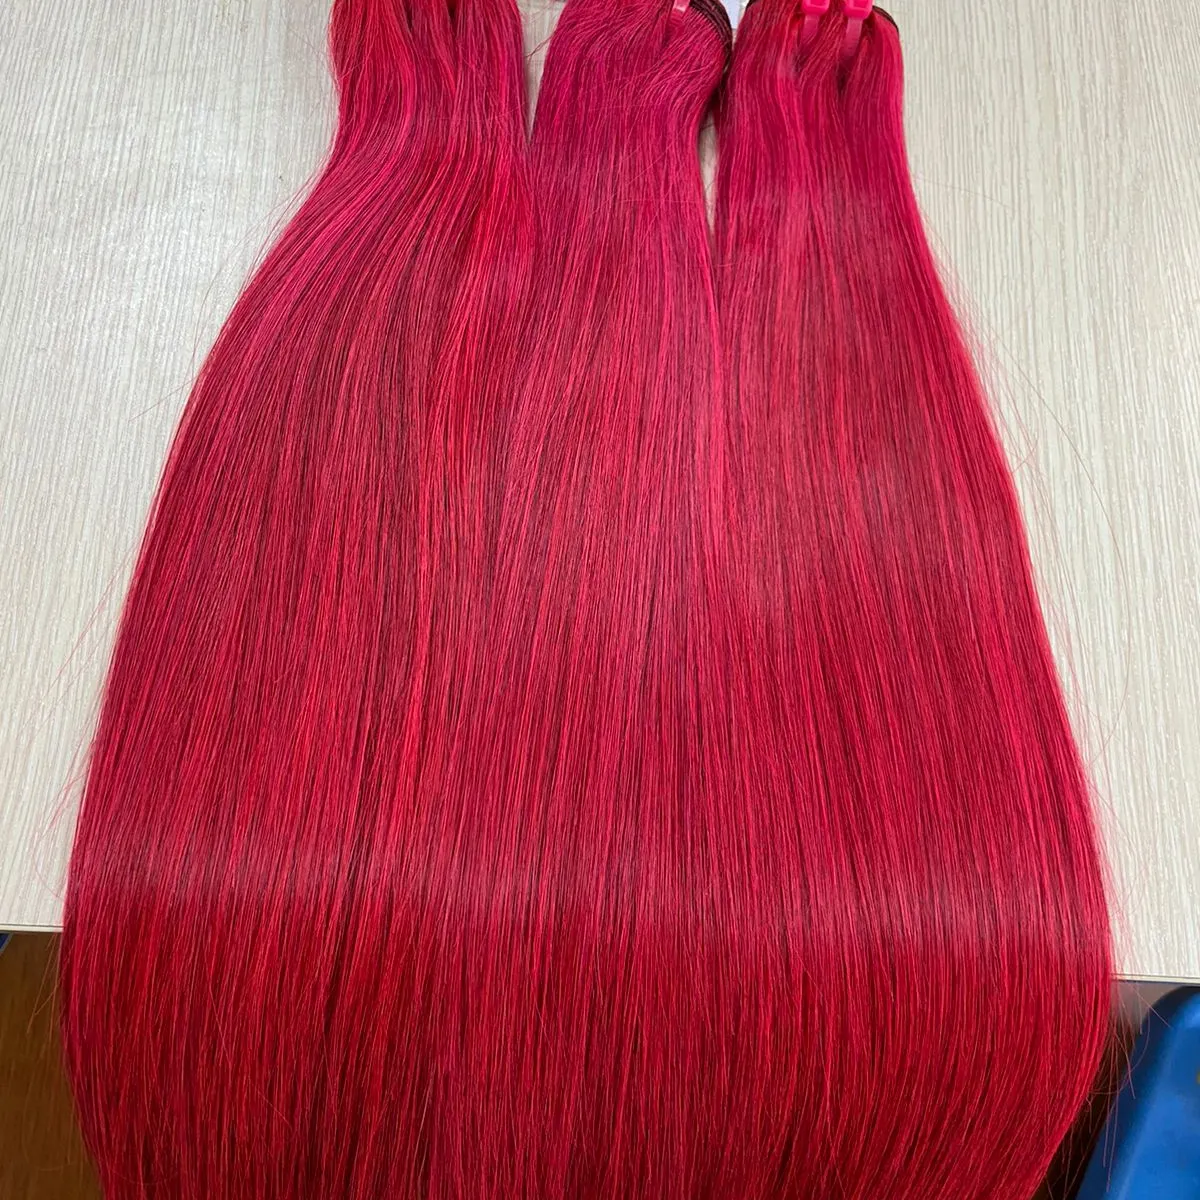 Vietnmamese Human Hair Extension Vietnamese Straight Red Color Human Hair Extension